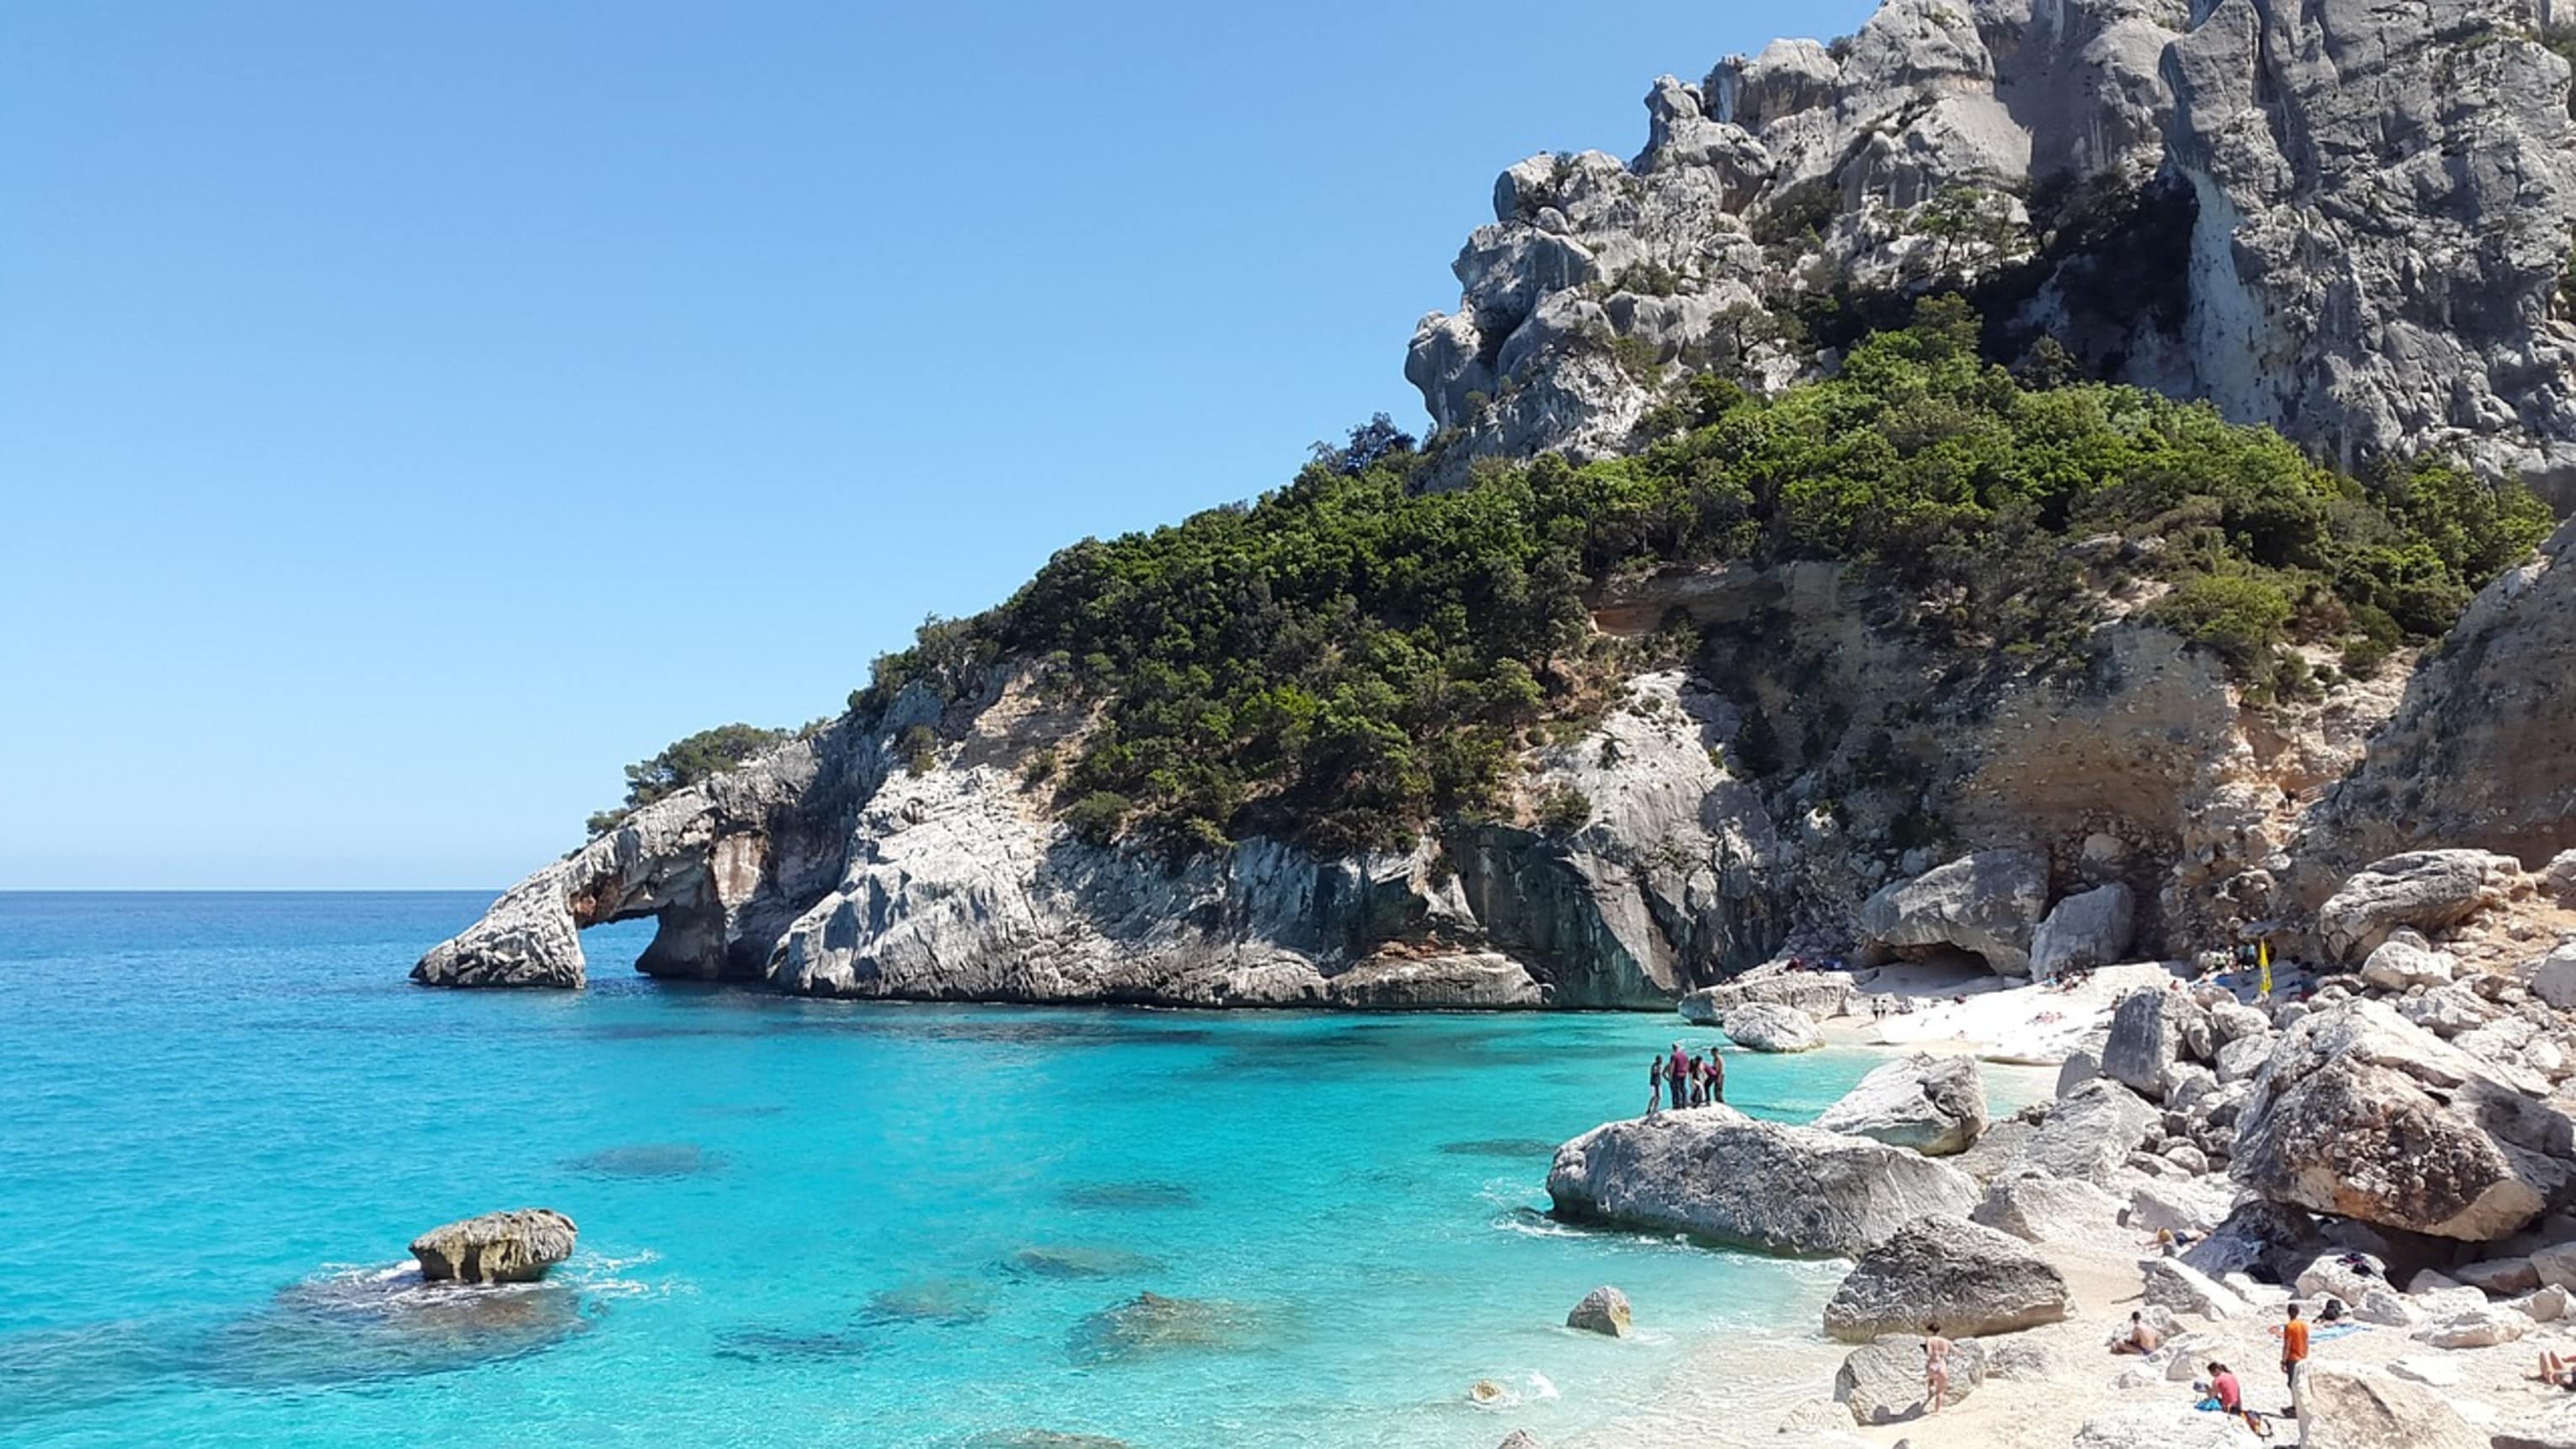  Gorgeous Cala Goloritze on the eastern shores of Sardinia